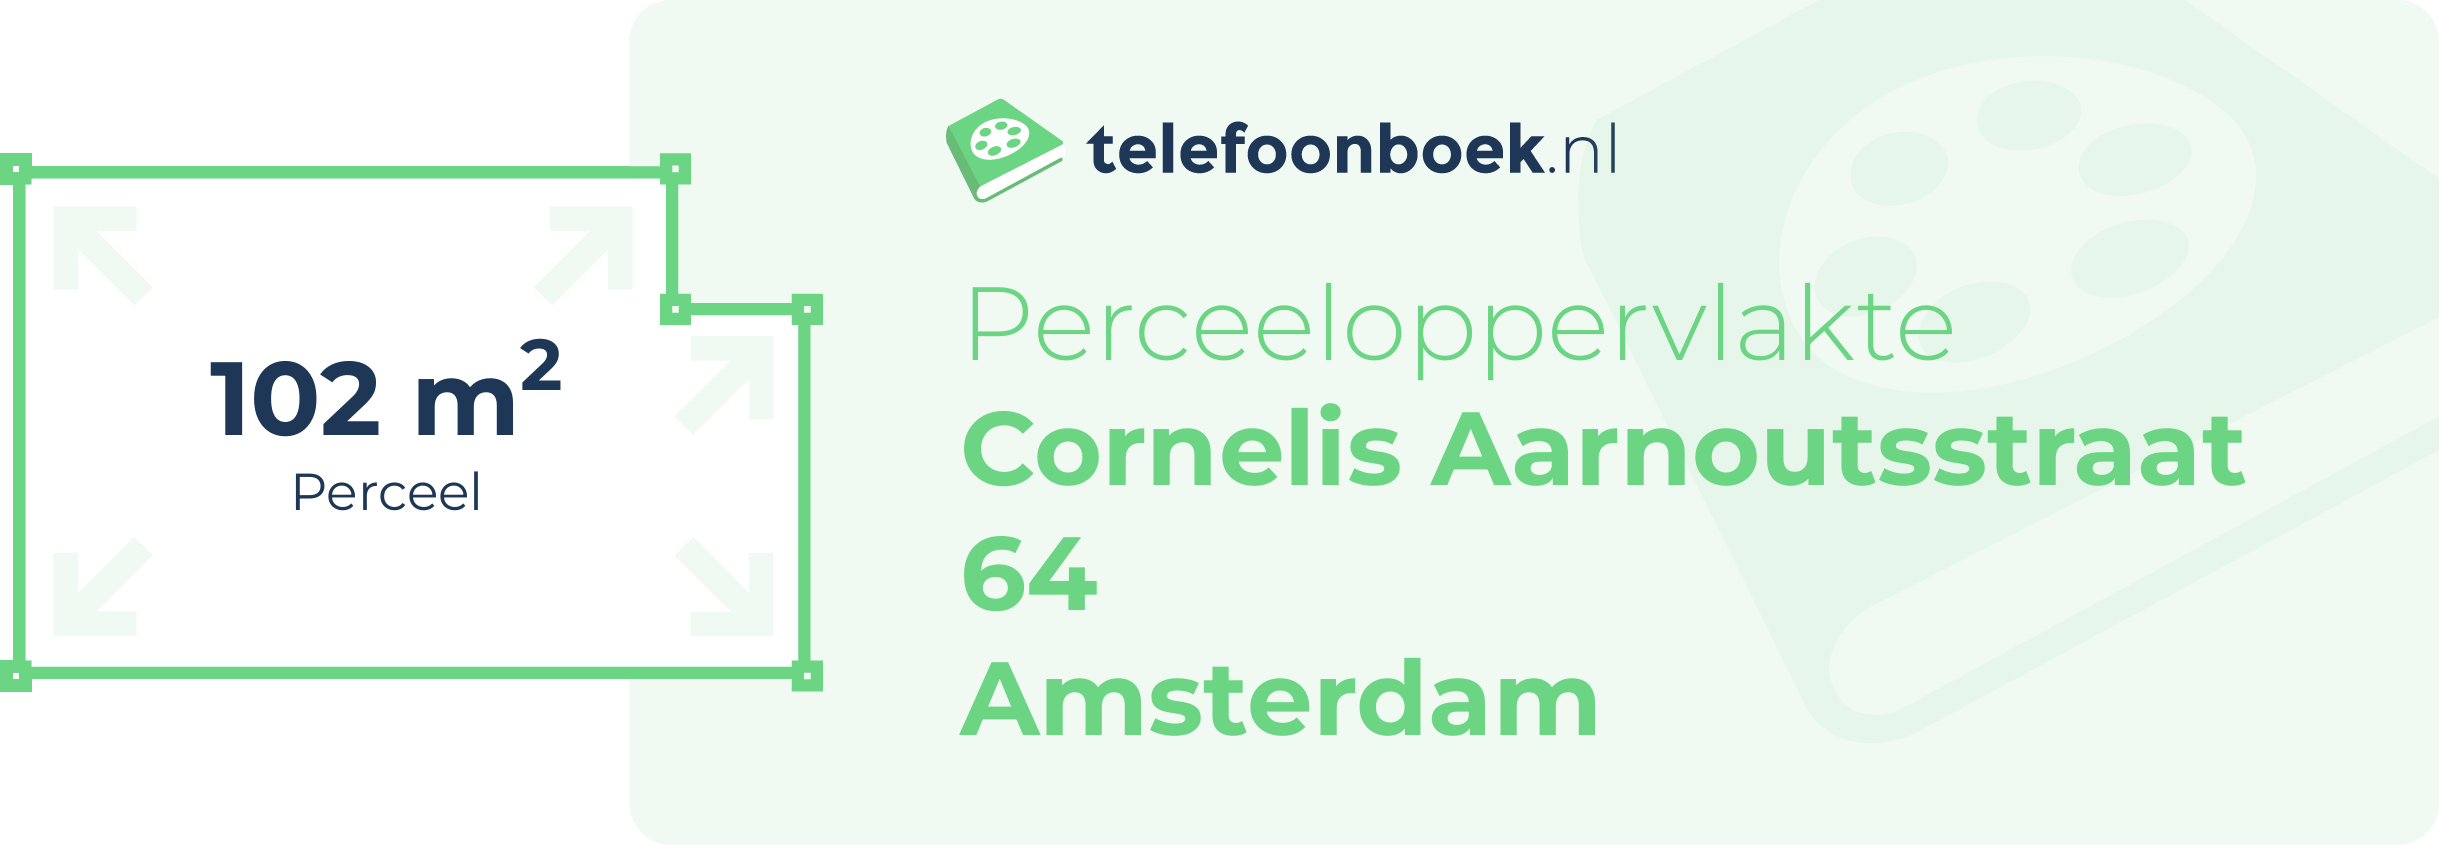 Perceeloppervlakte Cornelis Aarnoutsstraat 64 Amsterdam